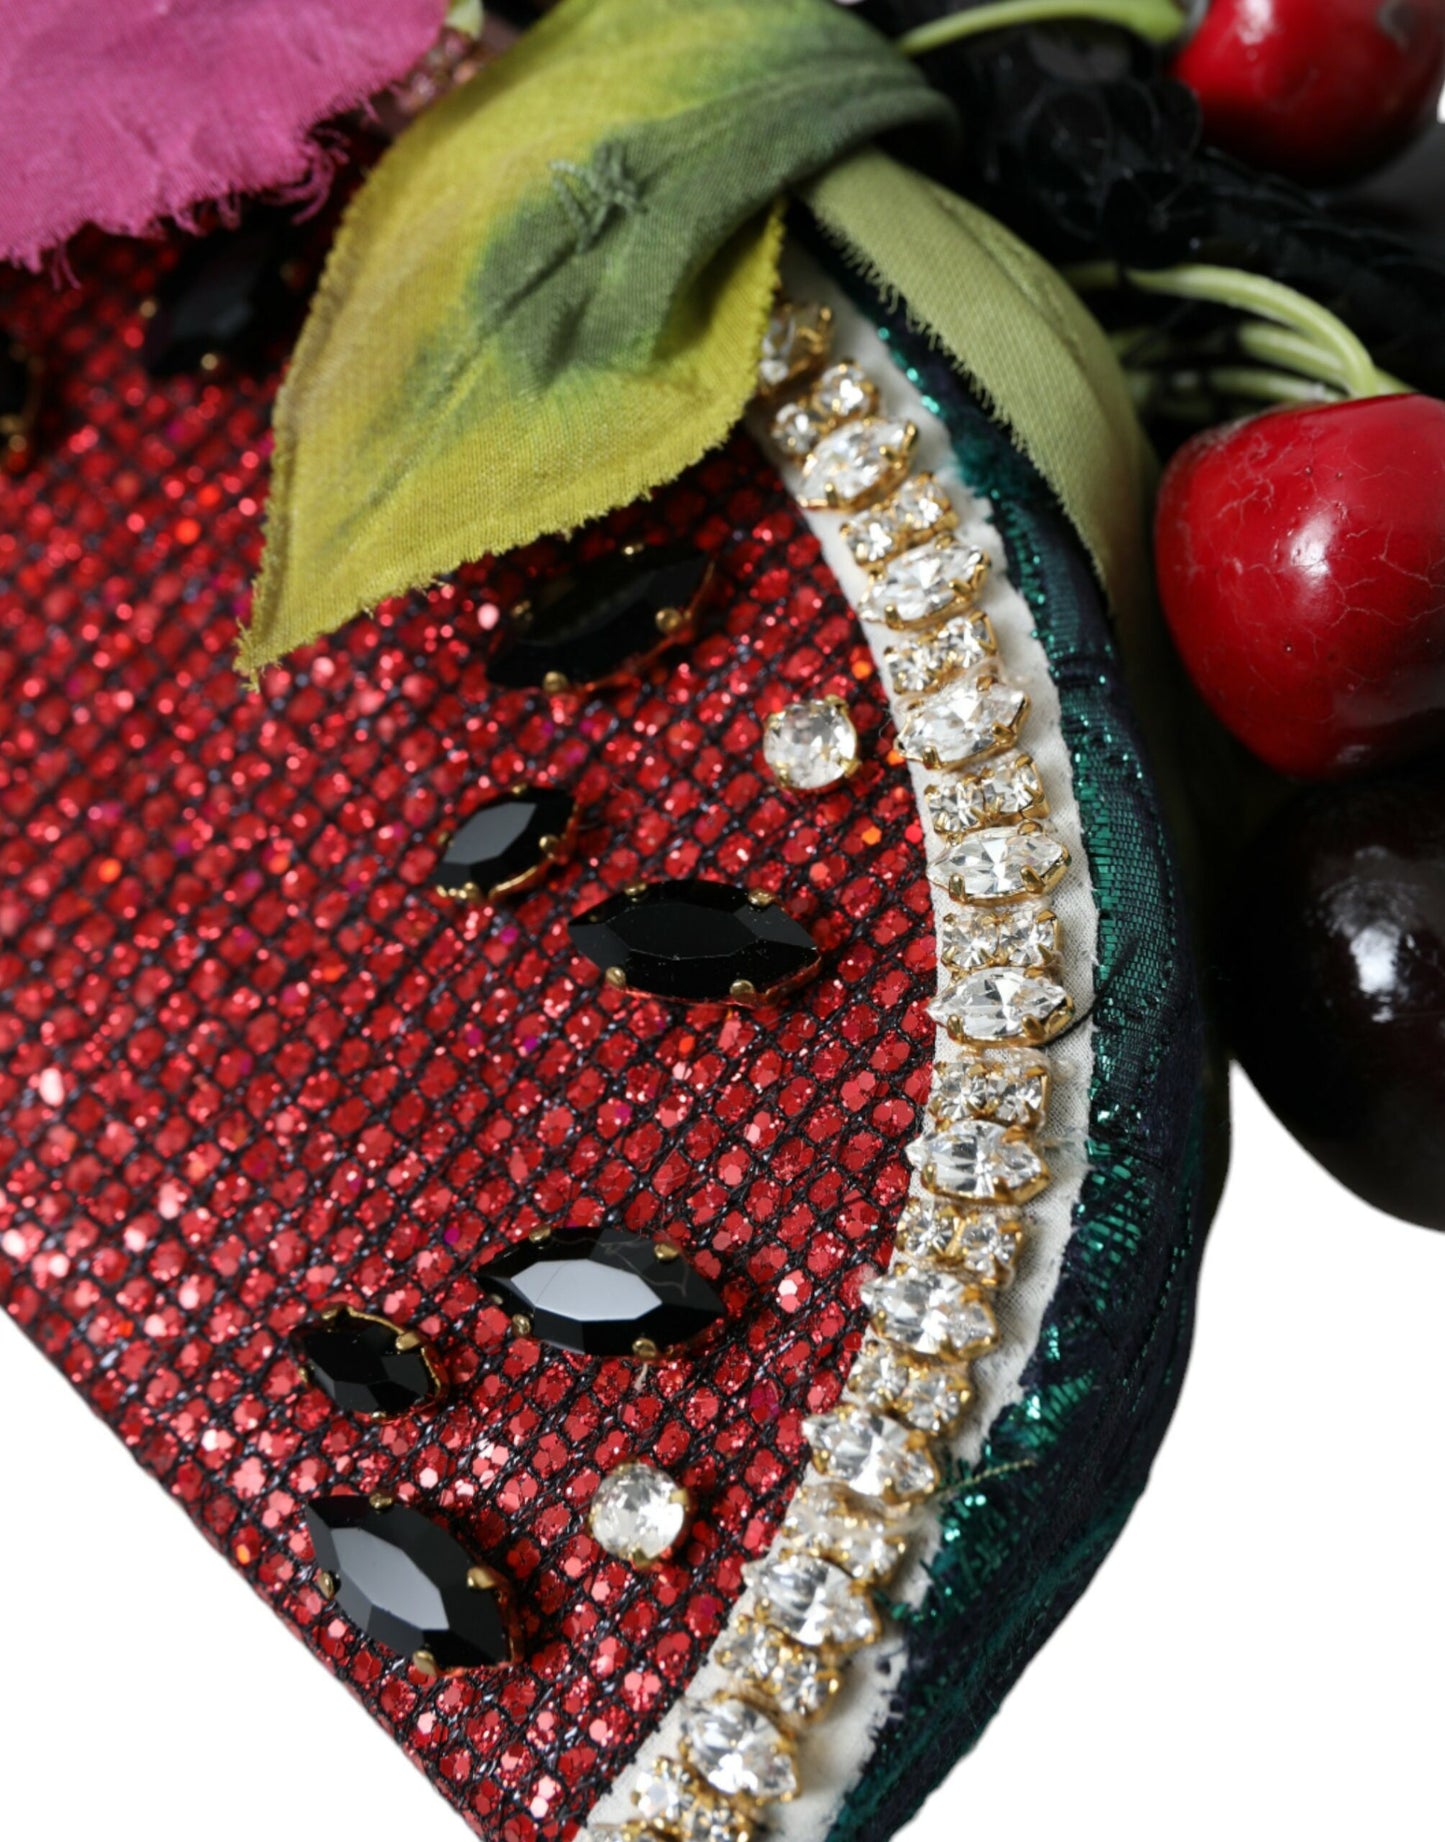 Dolce & Gabbana Red Watermelon Cherry Crystal Hairband Statement Diadem